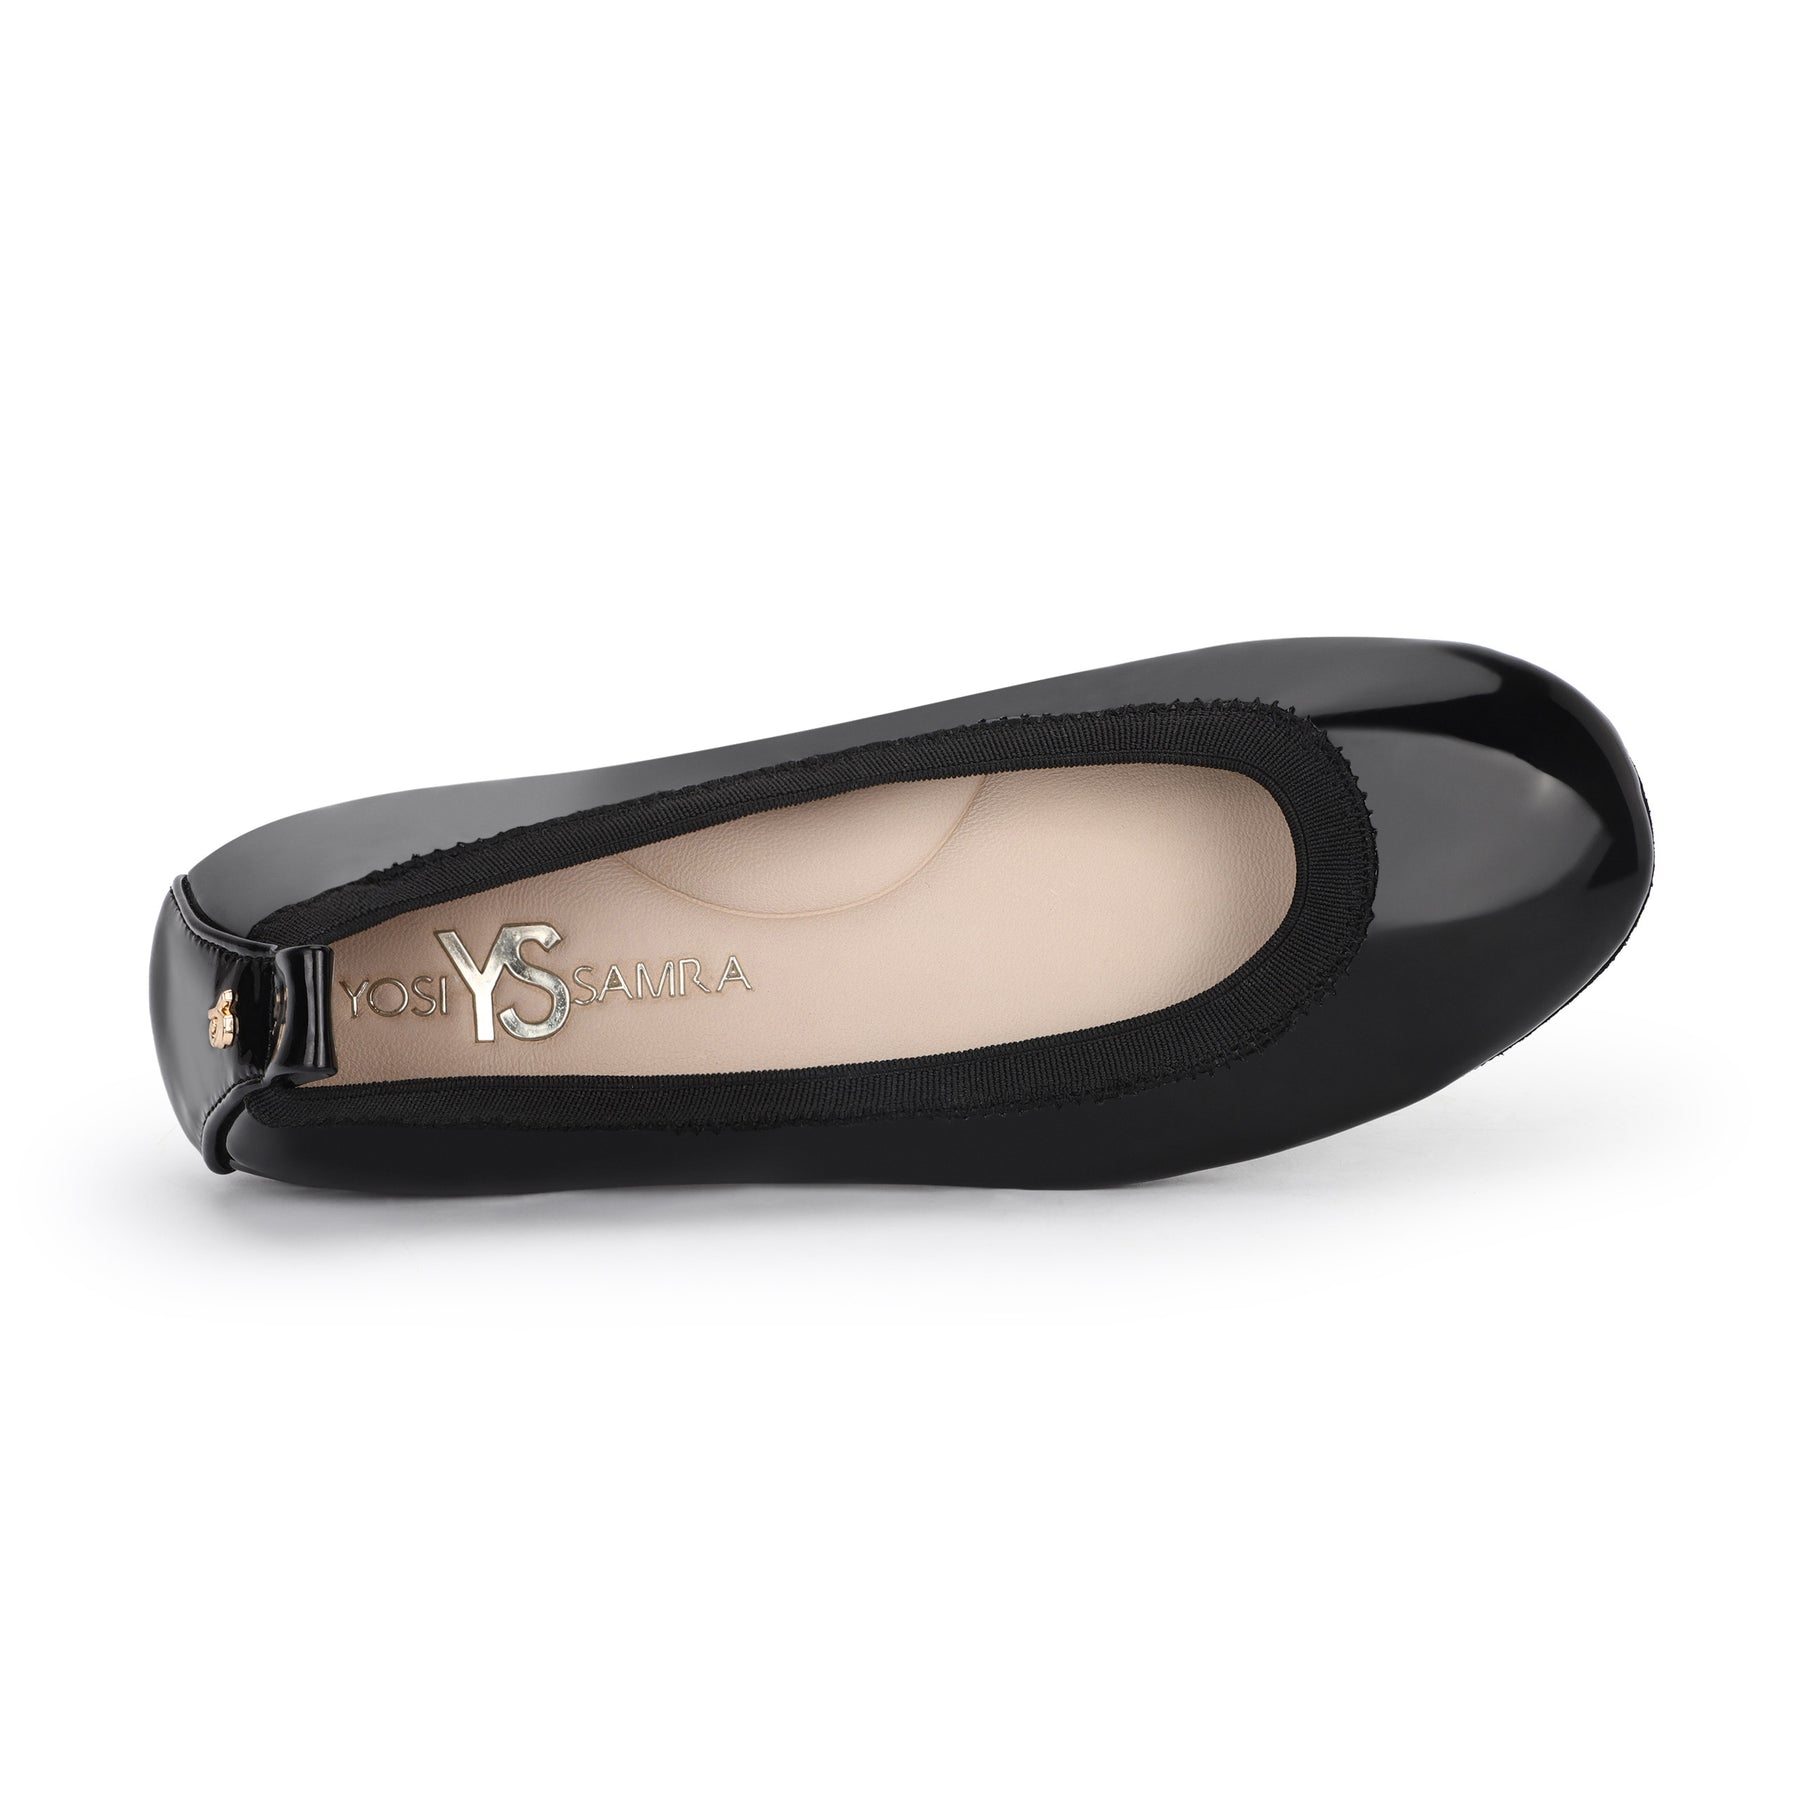 Samara Foldable Ballet Flat in Black Patent Leather